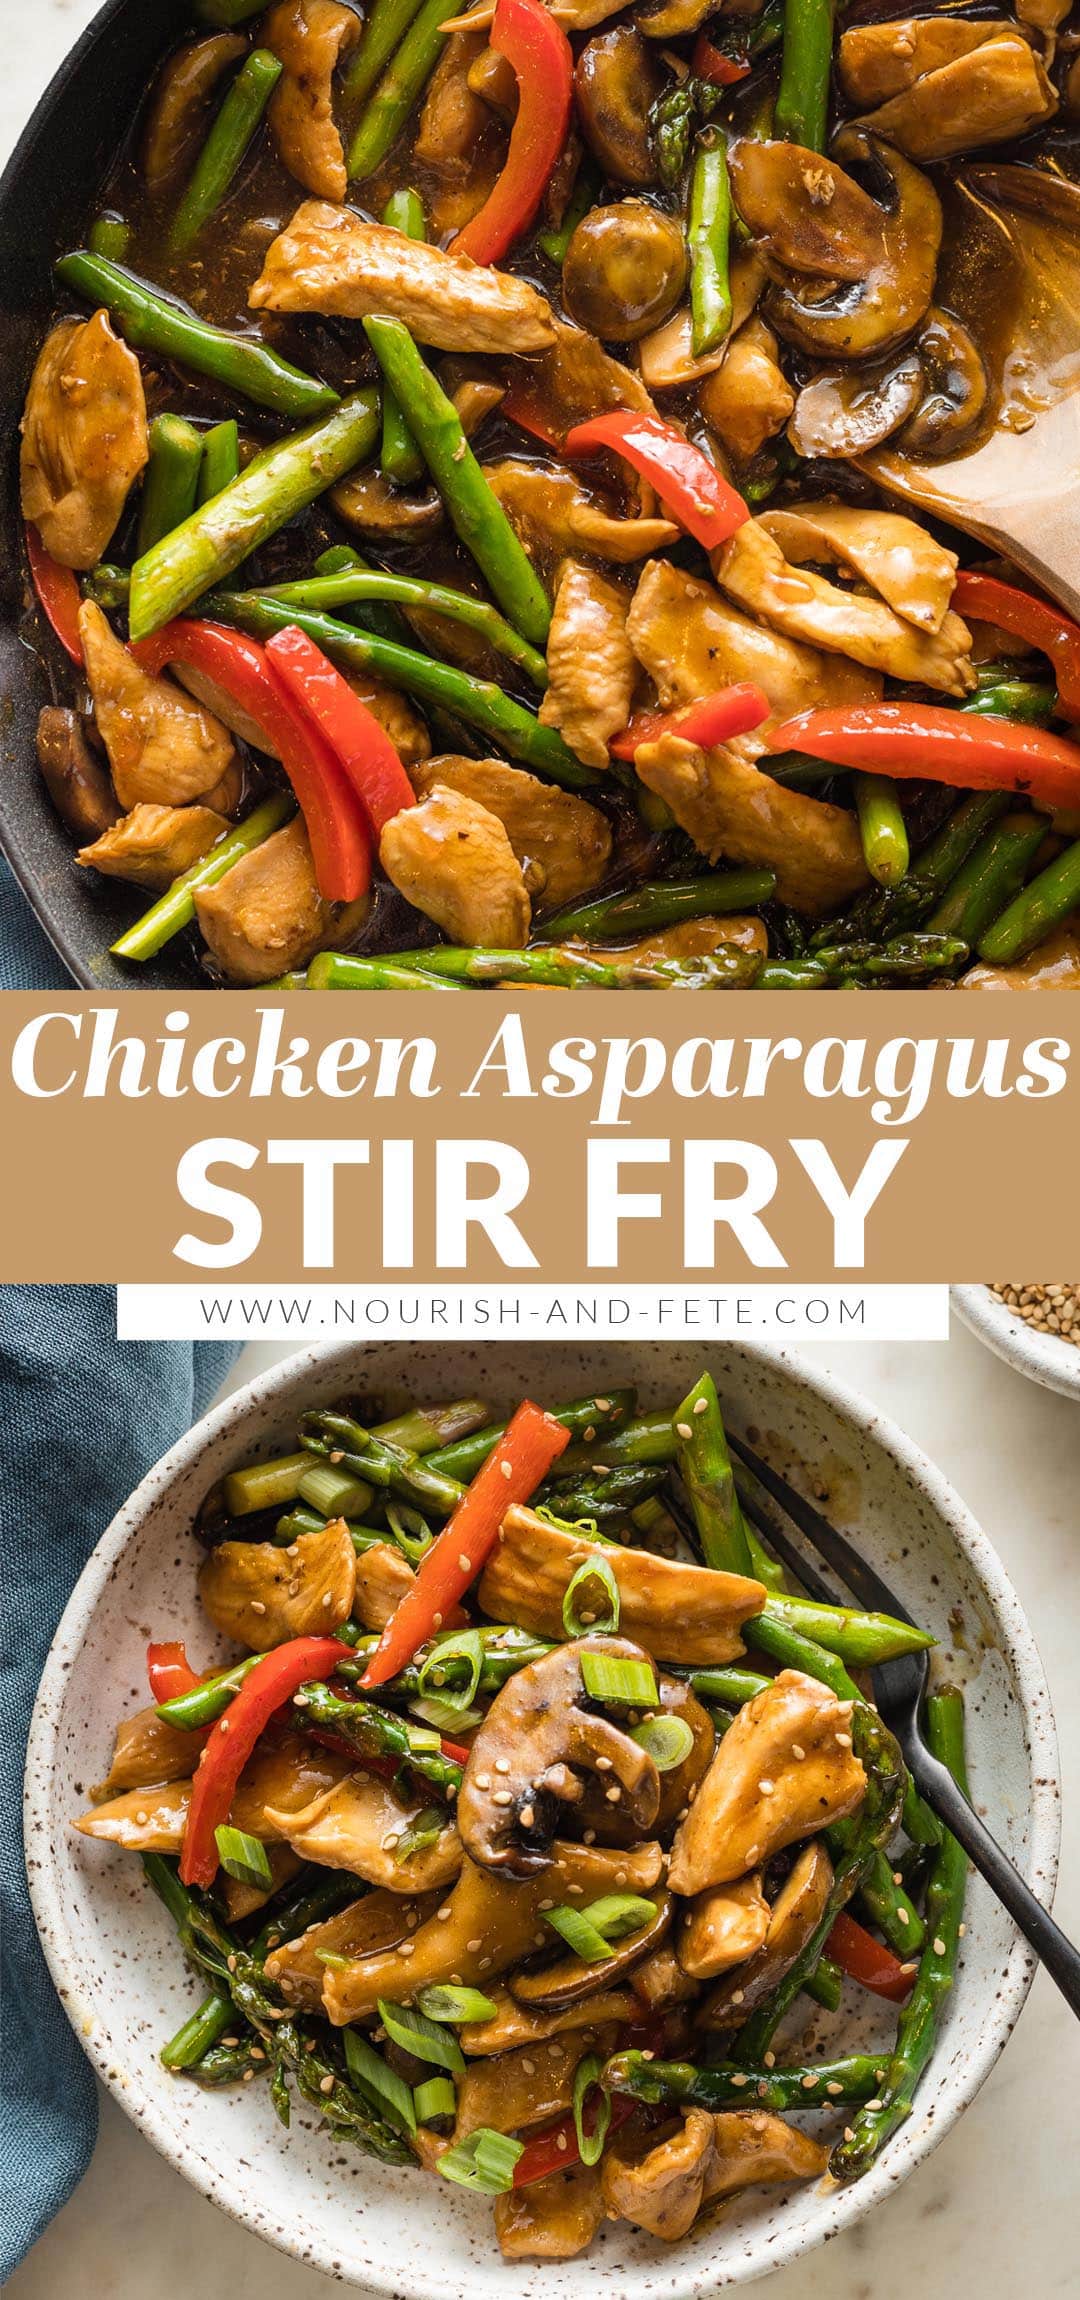 Chicken Asparagus Stir Fry - Nourish and Fete